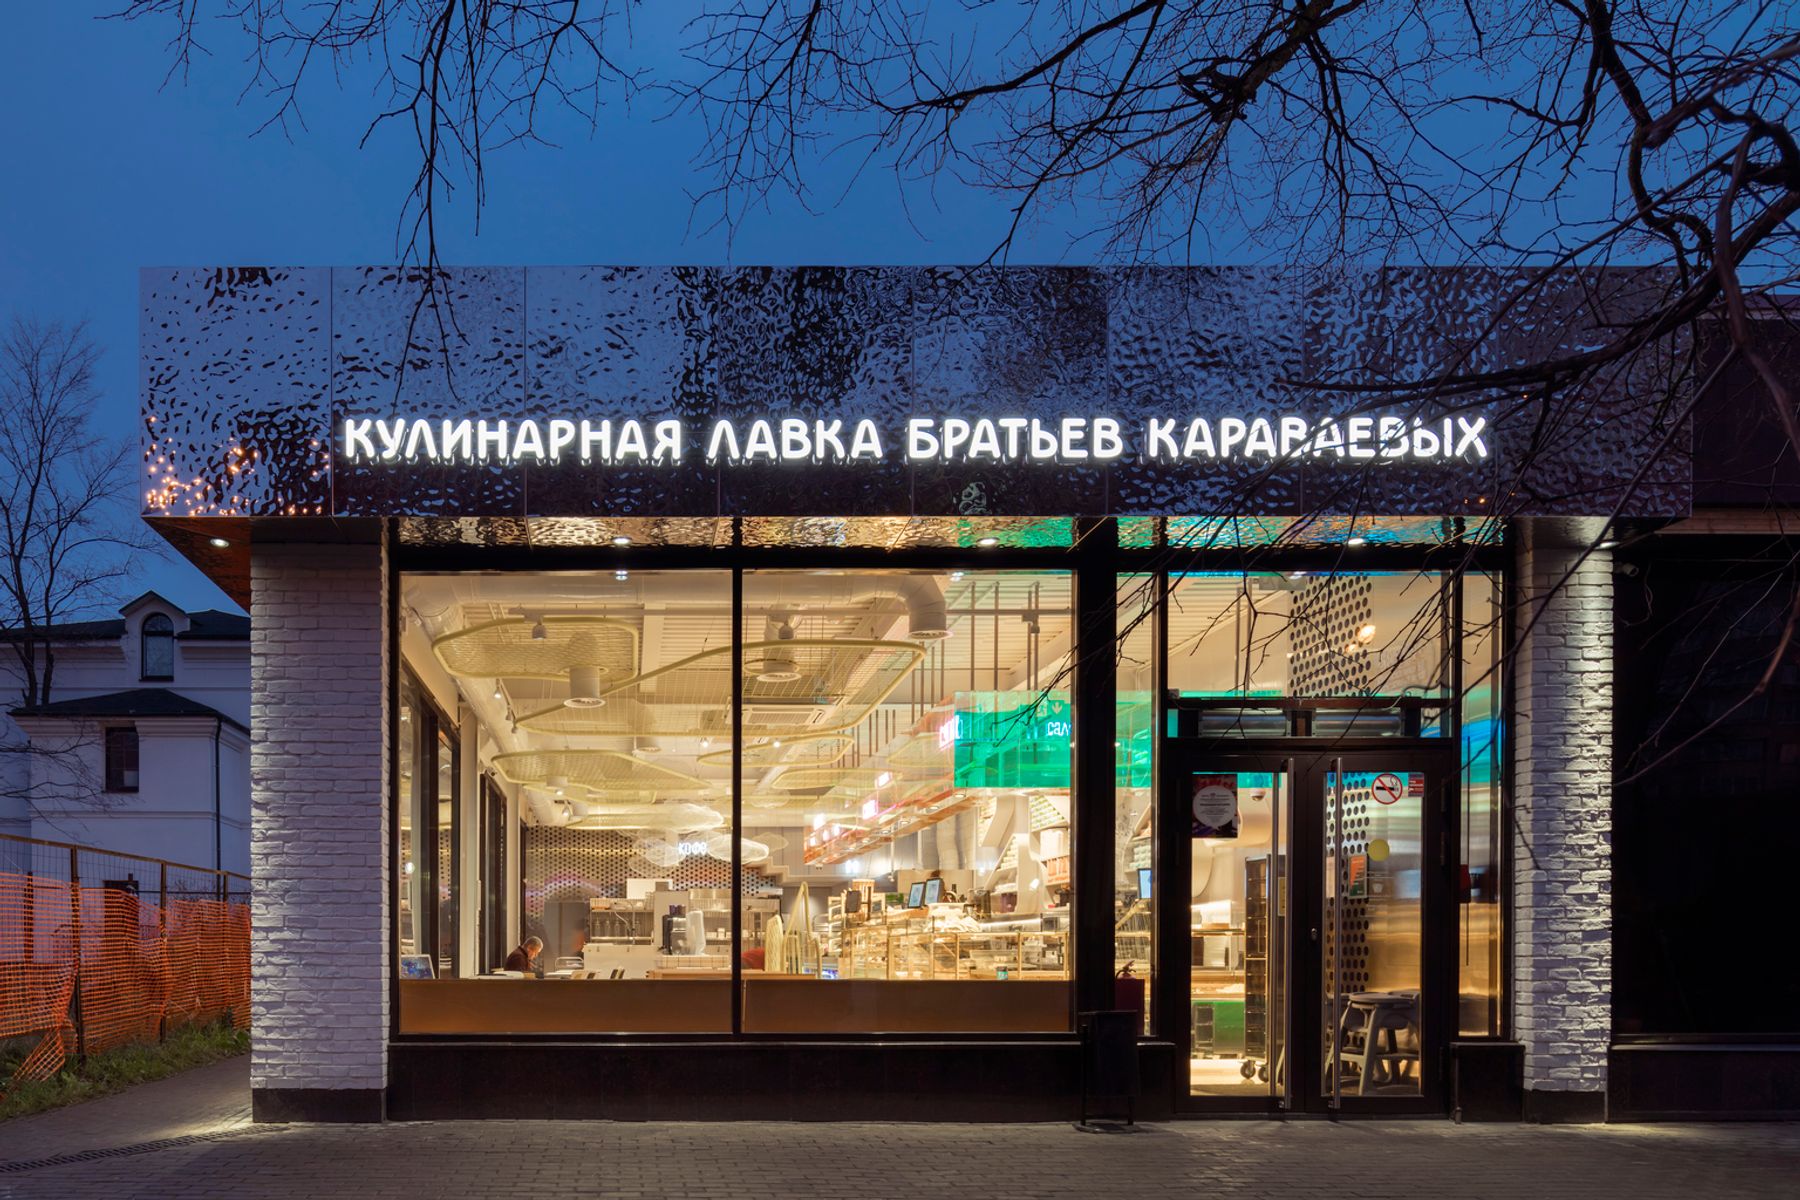 Karavaevi Brothers Cafe – Krzhizhanovskogo, Moscou. Architecture et conception lumière :  V12 Architects / Vvgeniy Shchetinkin, Lleeza Semionova, Moscou. Photographie : D. Chebanenko.